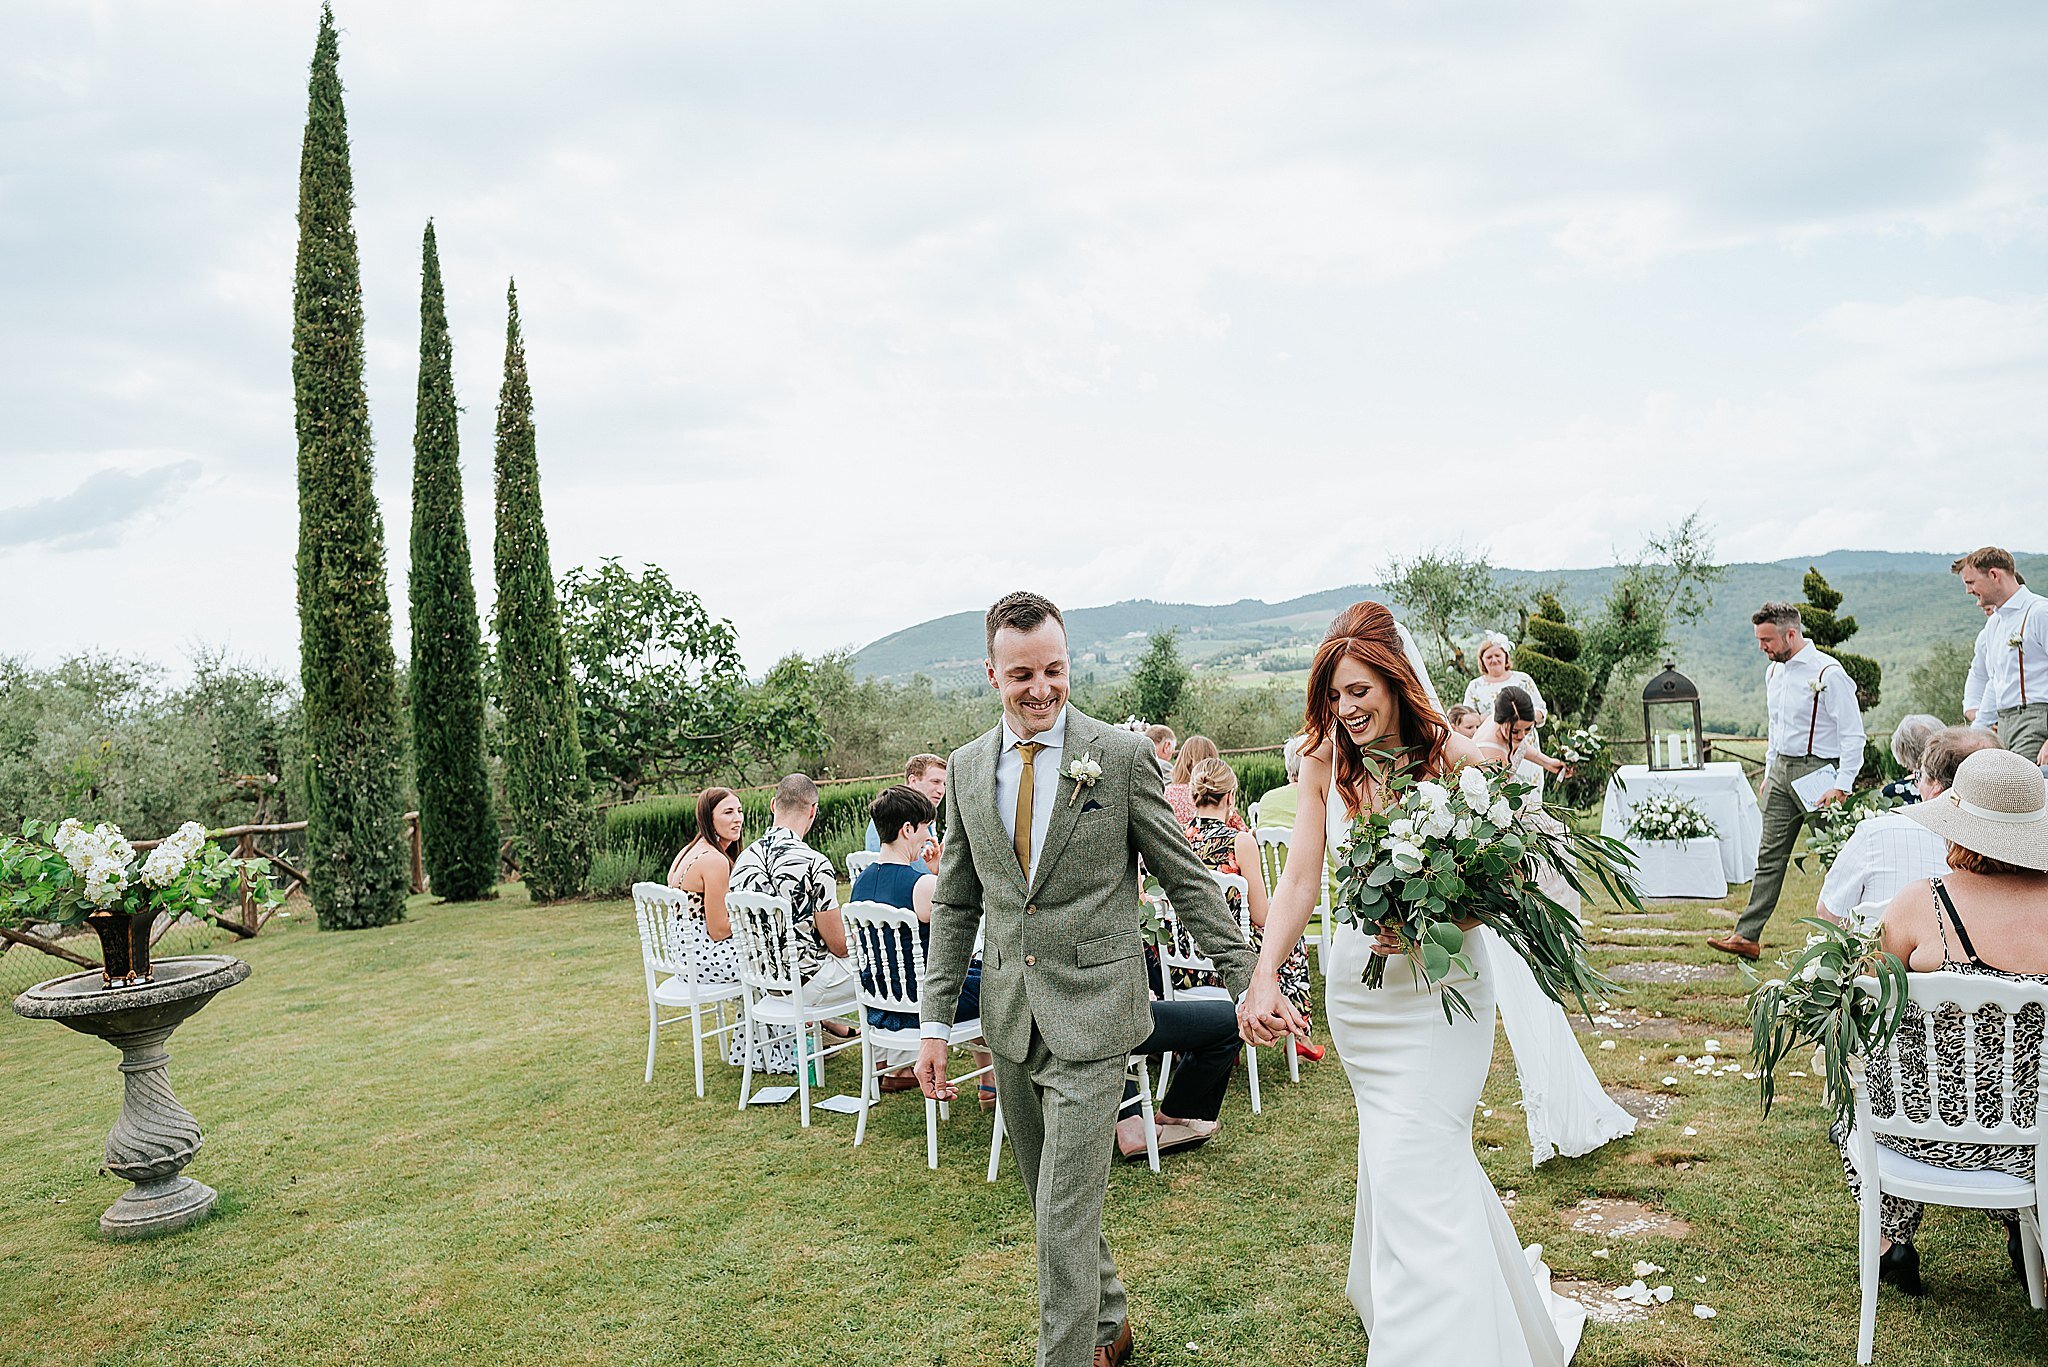 outdoor wedding ceremony in tuscany, italy